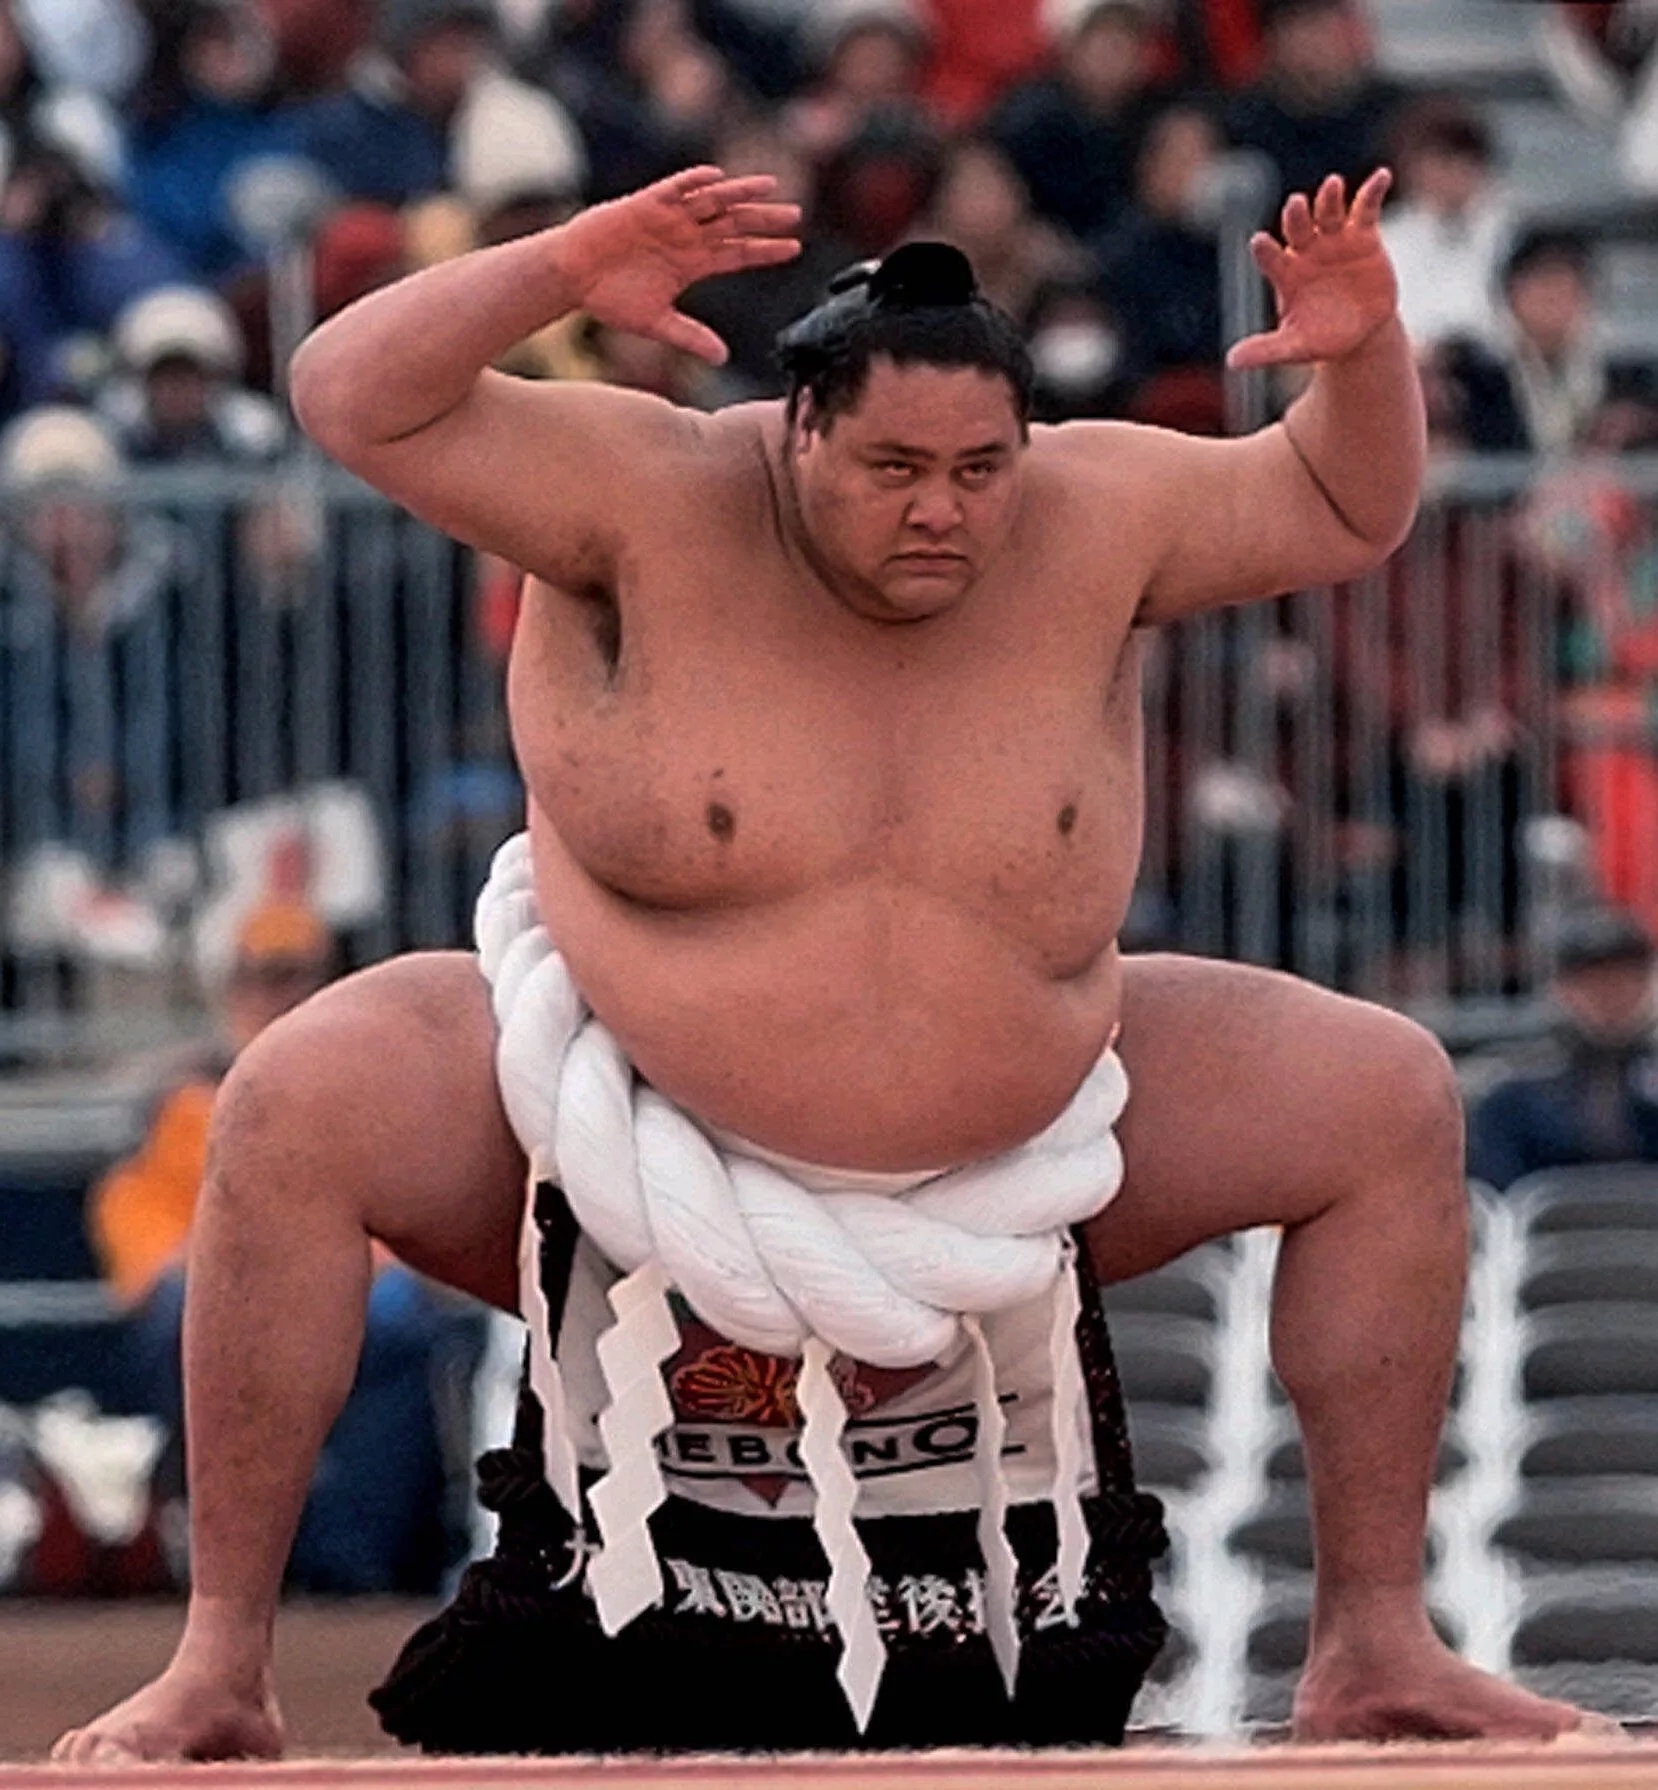 chad-rowan-akebono-sumo-wrestler-ap-photo-jpg-4